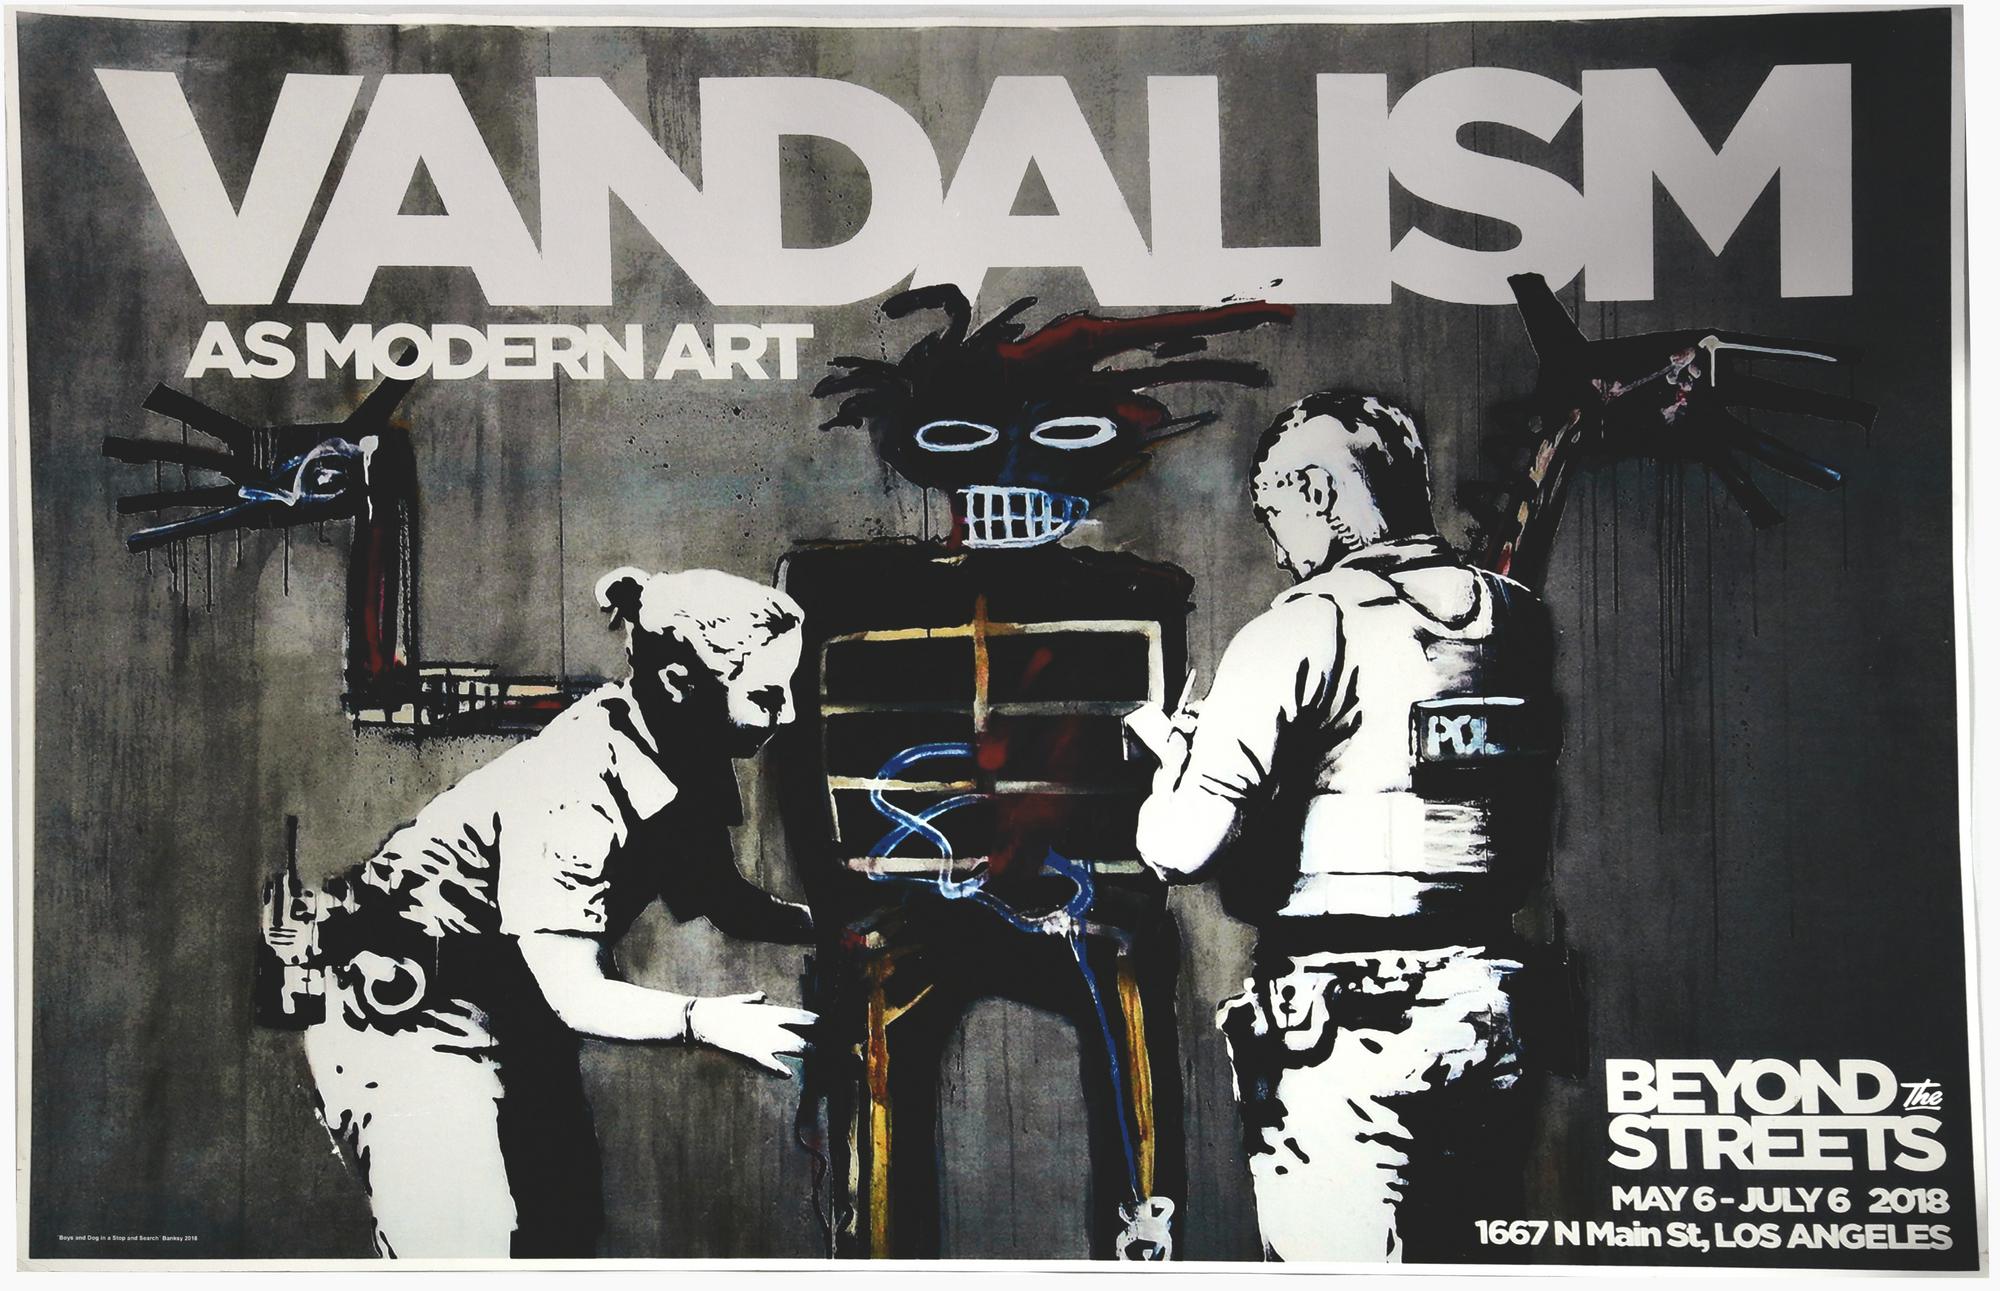 Da Banksy BANKSY X BASQUIAT: VANDALISM AS MODERN ART eliografia, cm 58,5x84